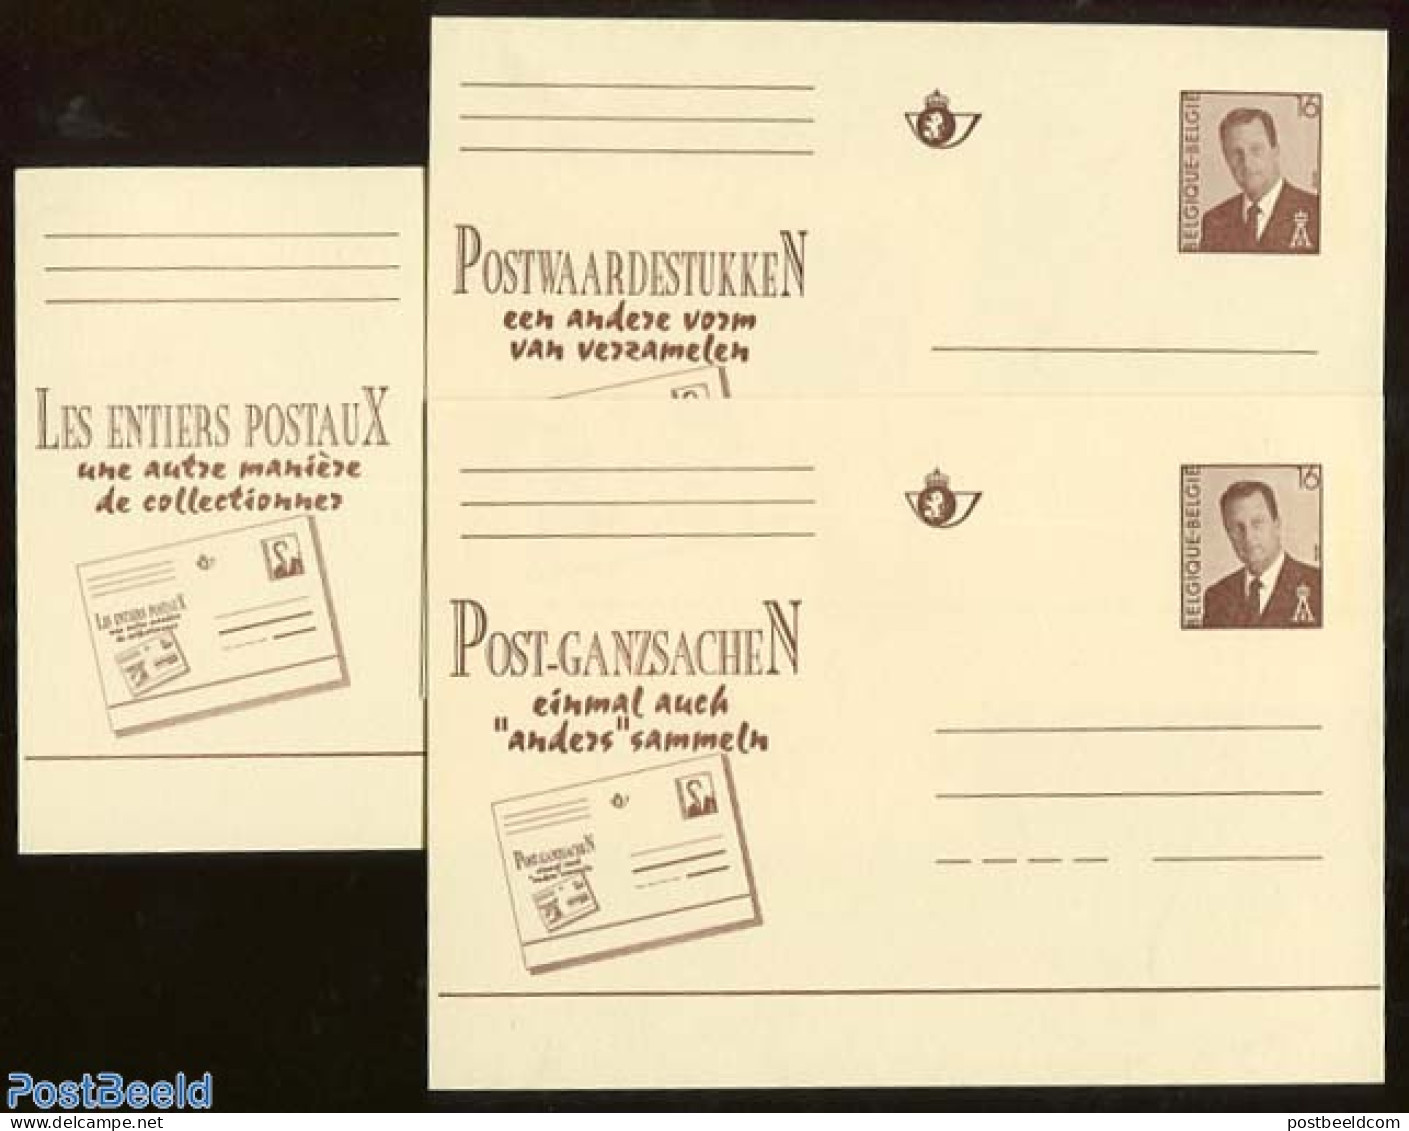 Belgium 1996 Postcard Set, Postal Stationery (3 Cards), Unused Postal Stationary - Briefe U. Dokumente